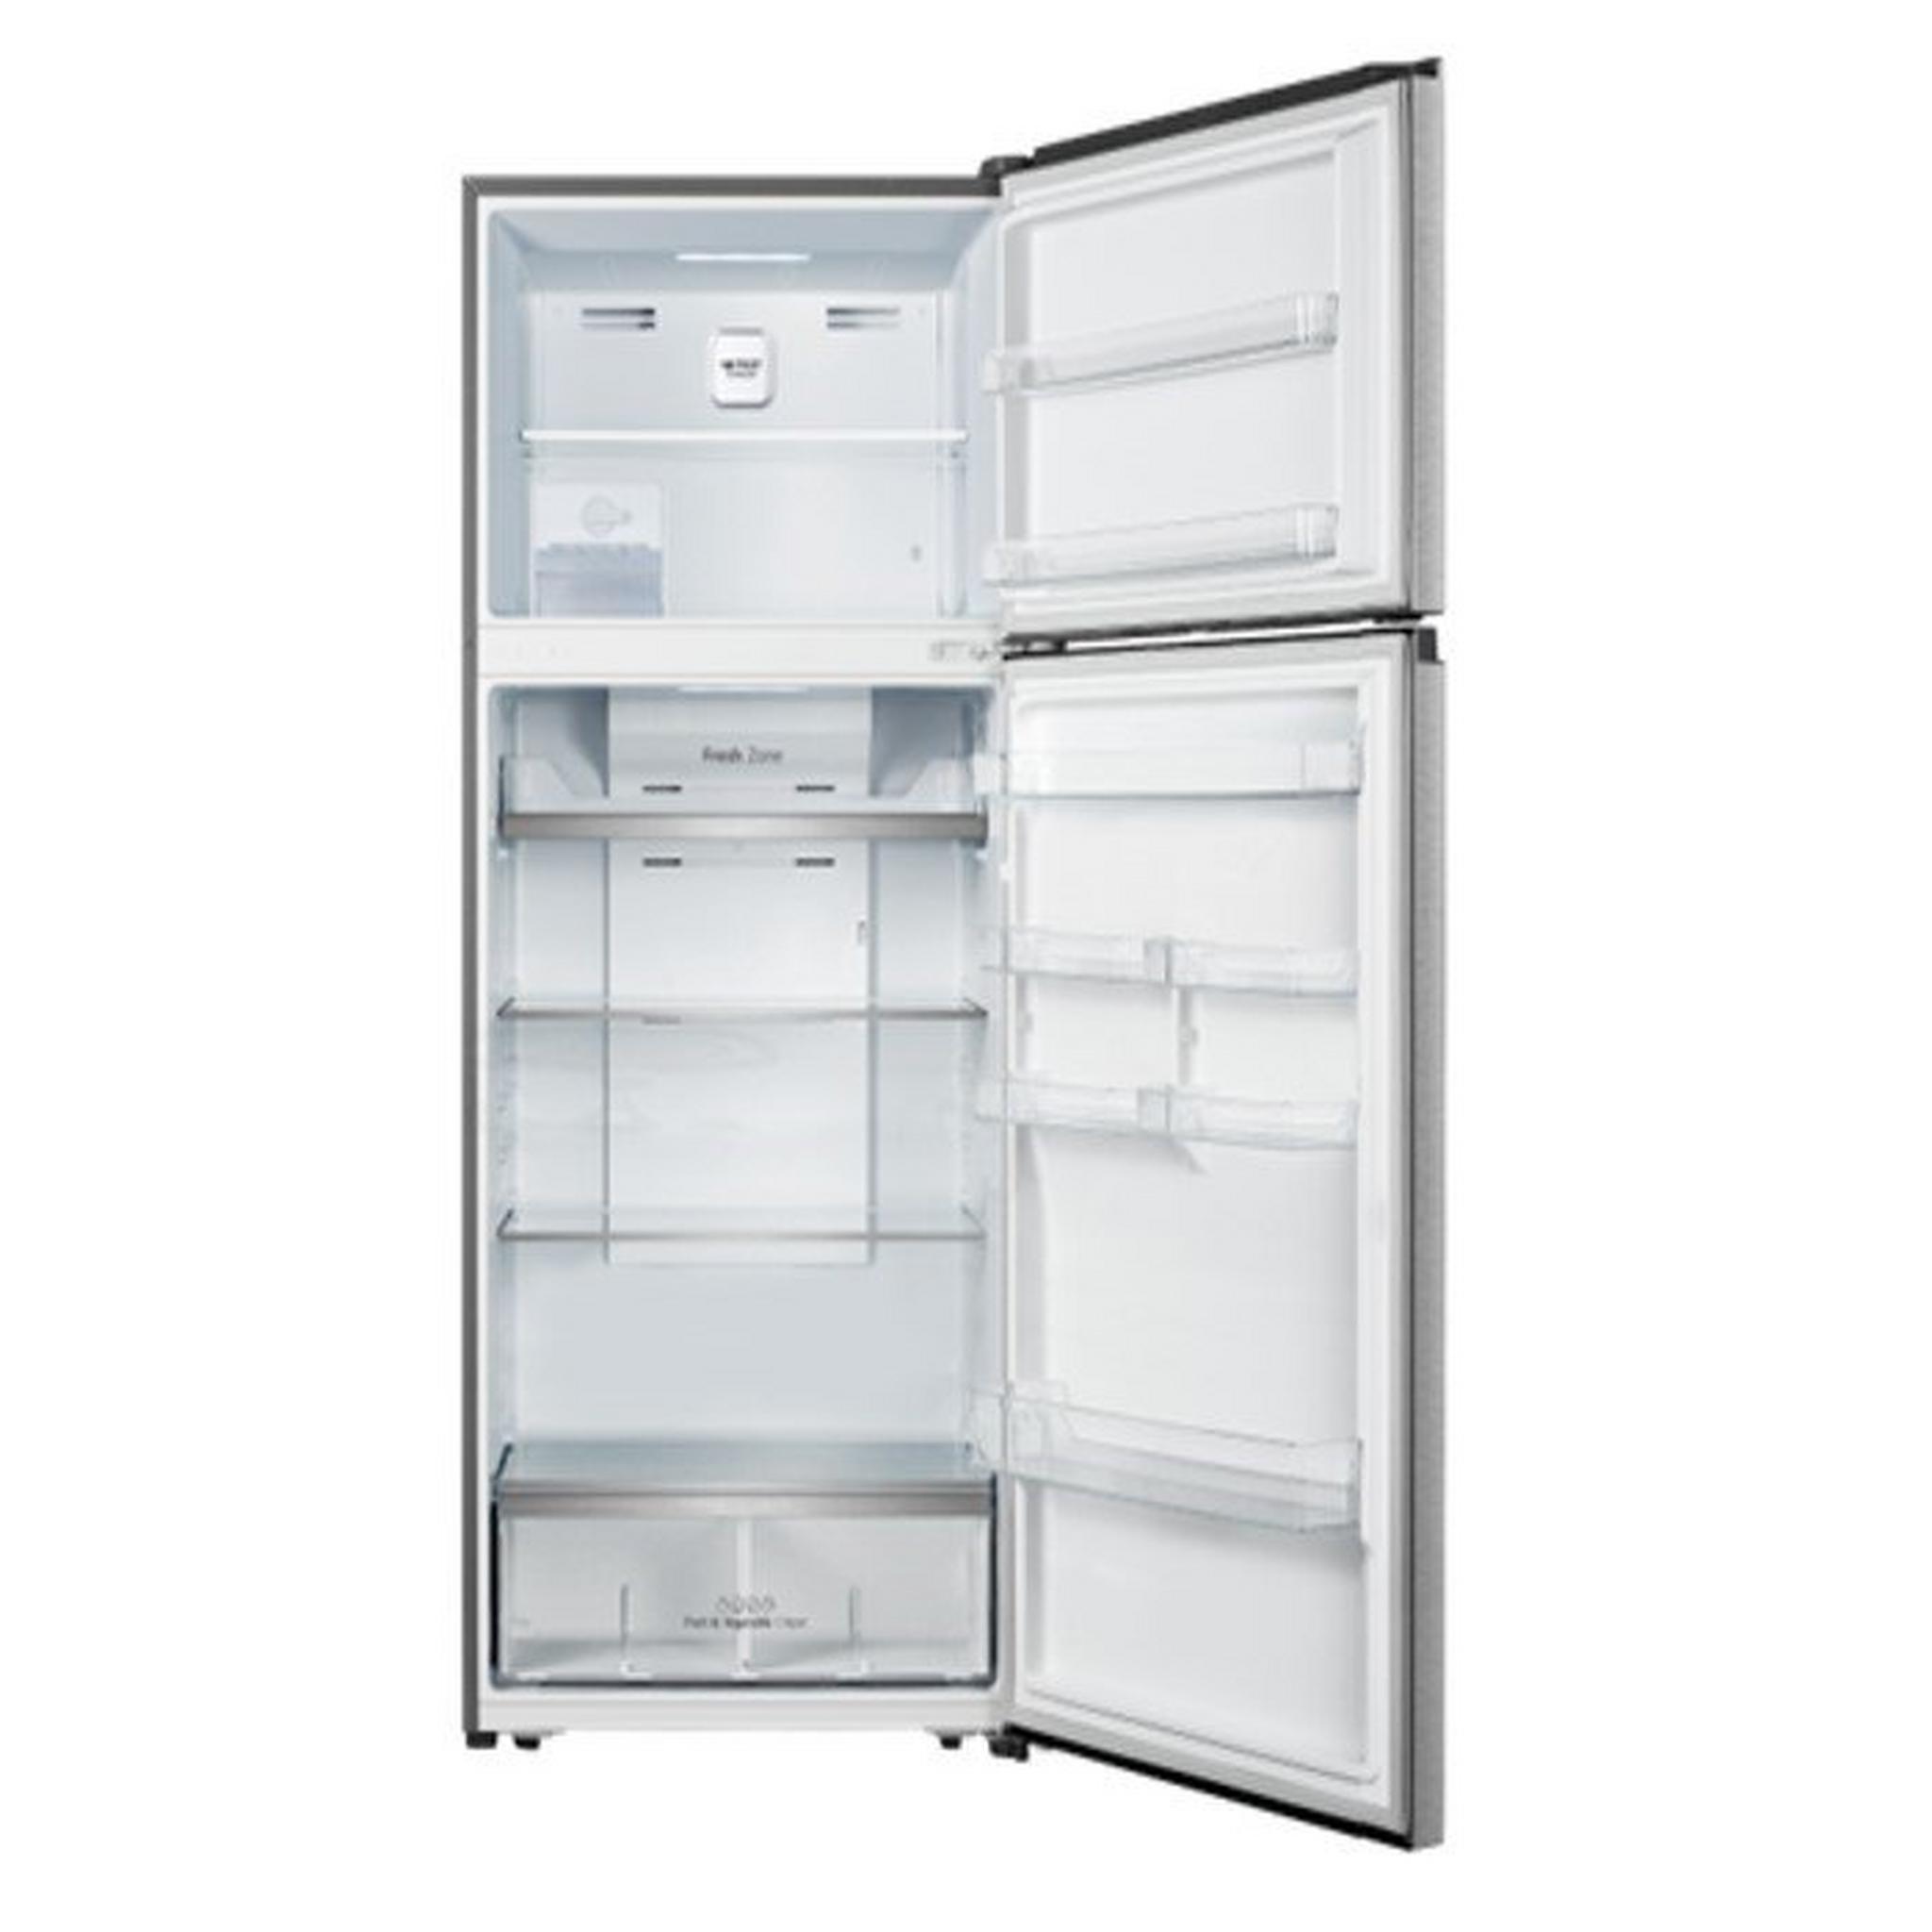 Hisense Top Mount Refrigerator with Digital Display Control, 26CFT, 729 Liters, RT729N4ASU1 - Inox